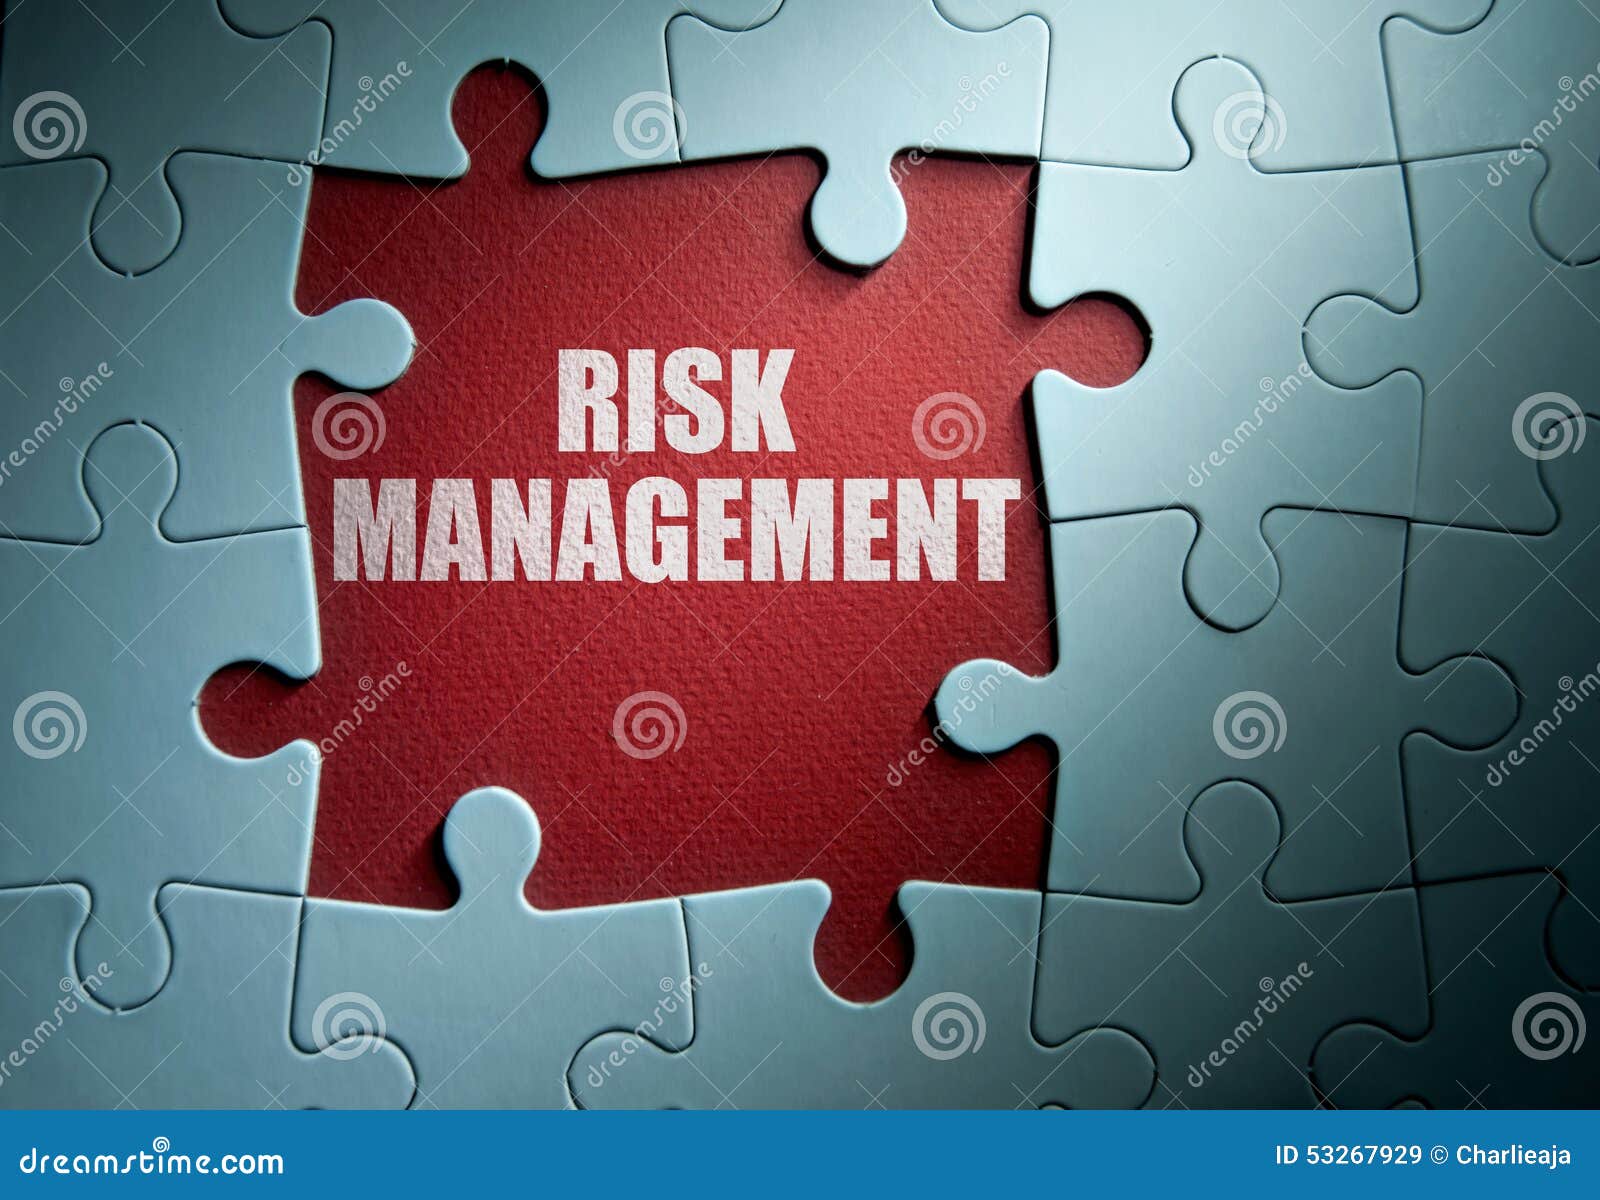 Risk management solution stock image. Image of business - 53267929